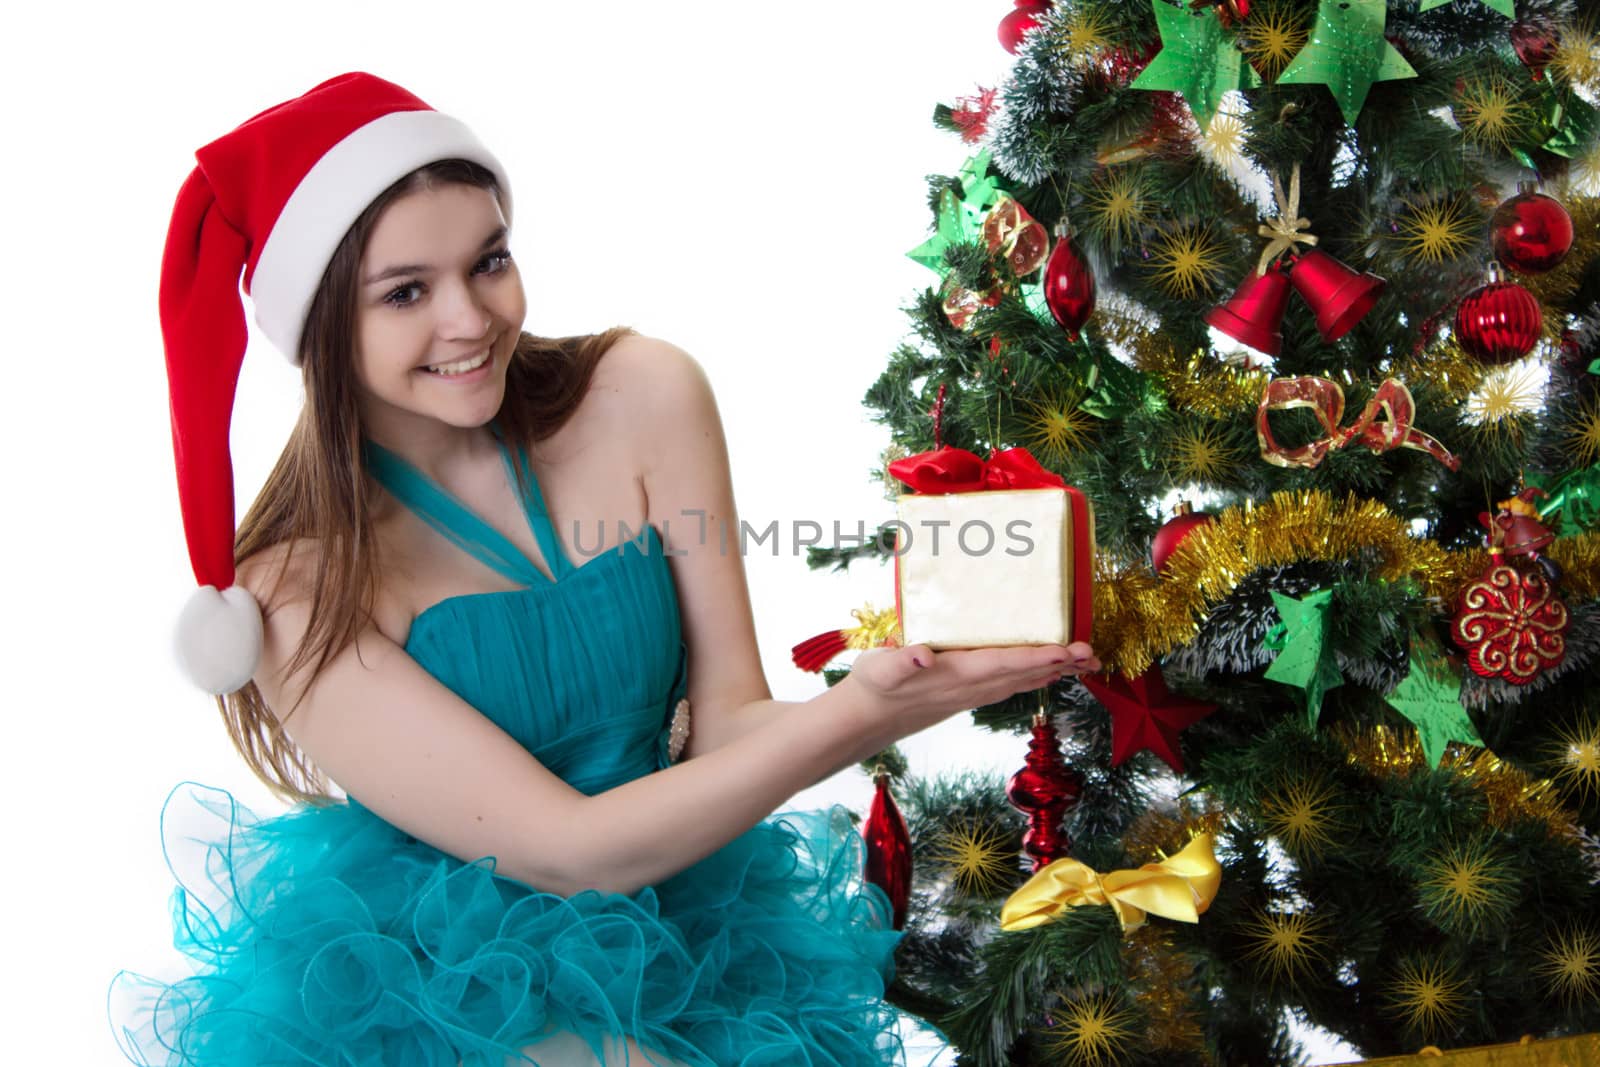 Teenage girl in Santa hat offering present under Christmas tree by Angel_a